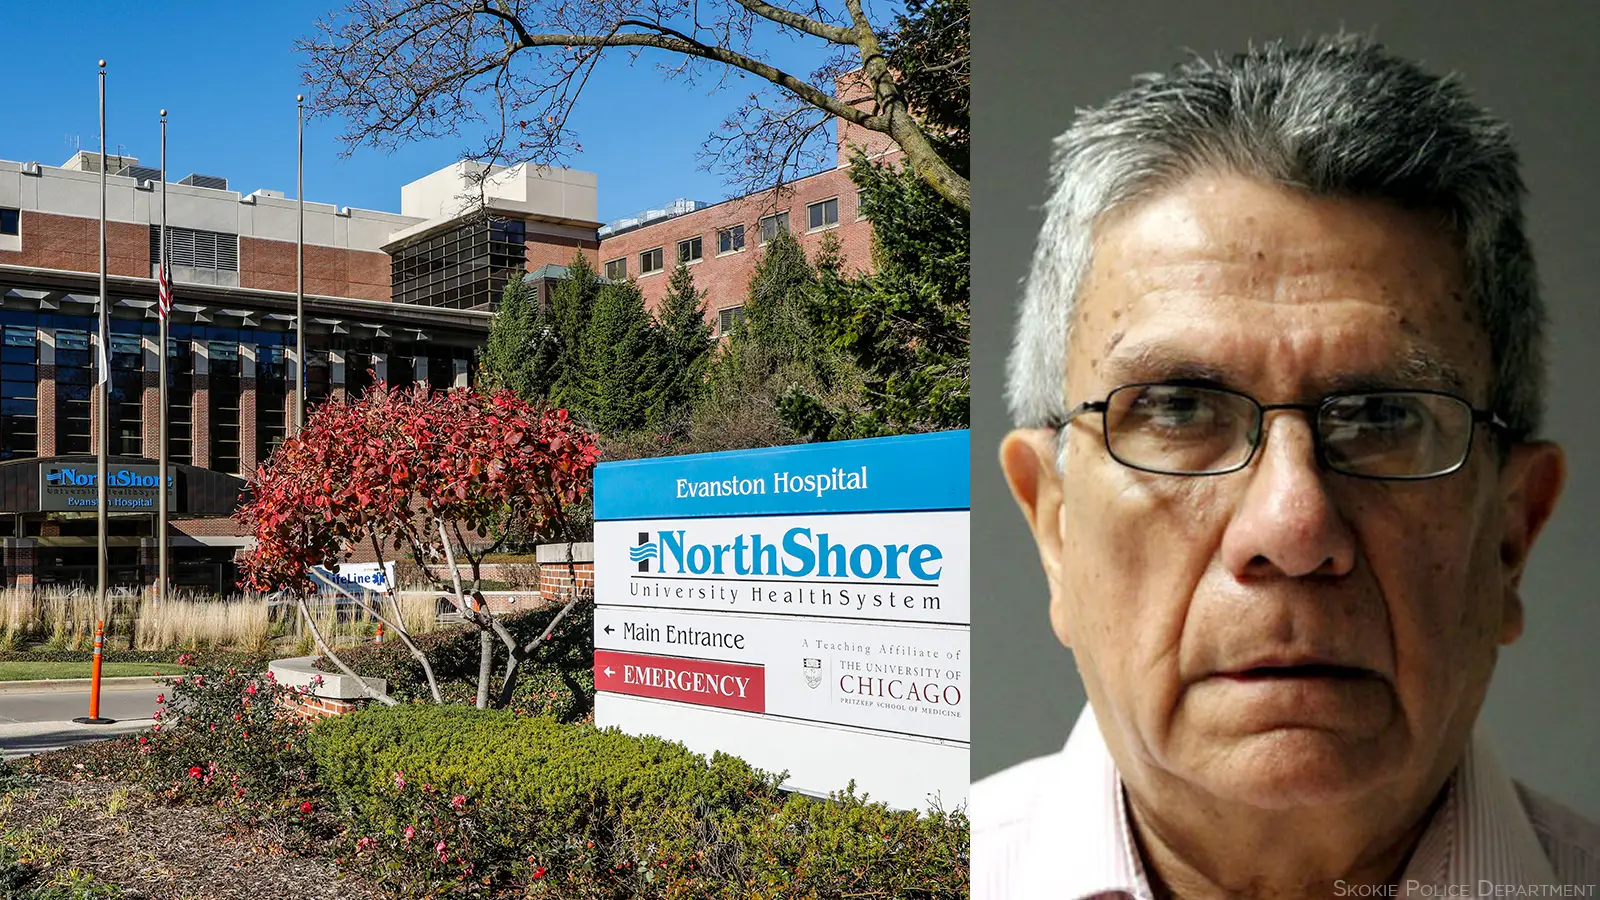 Jane Doe 37 alleges sexual assault by Gynecologist Fabio Ortega, NorthShore University HealthSystem